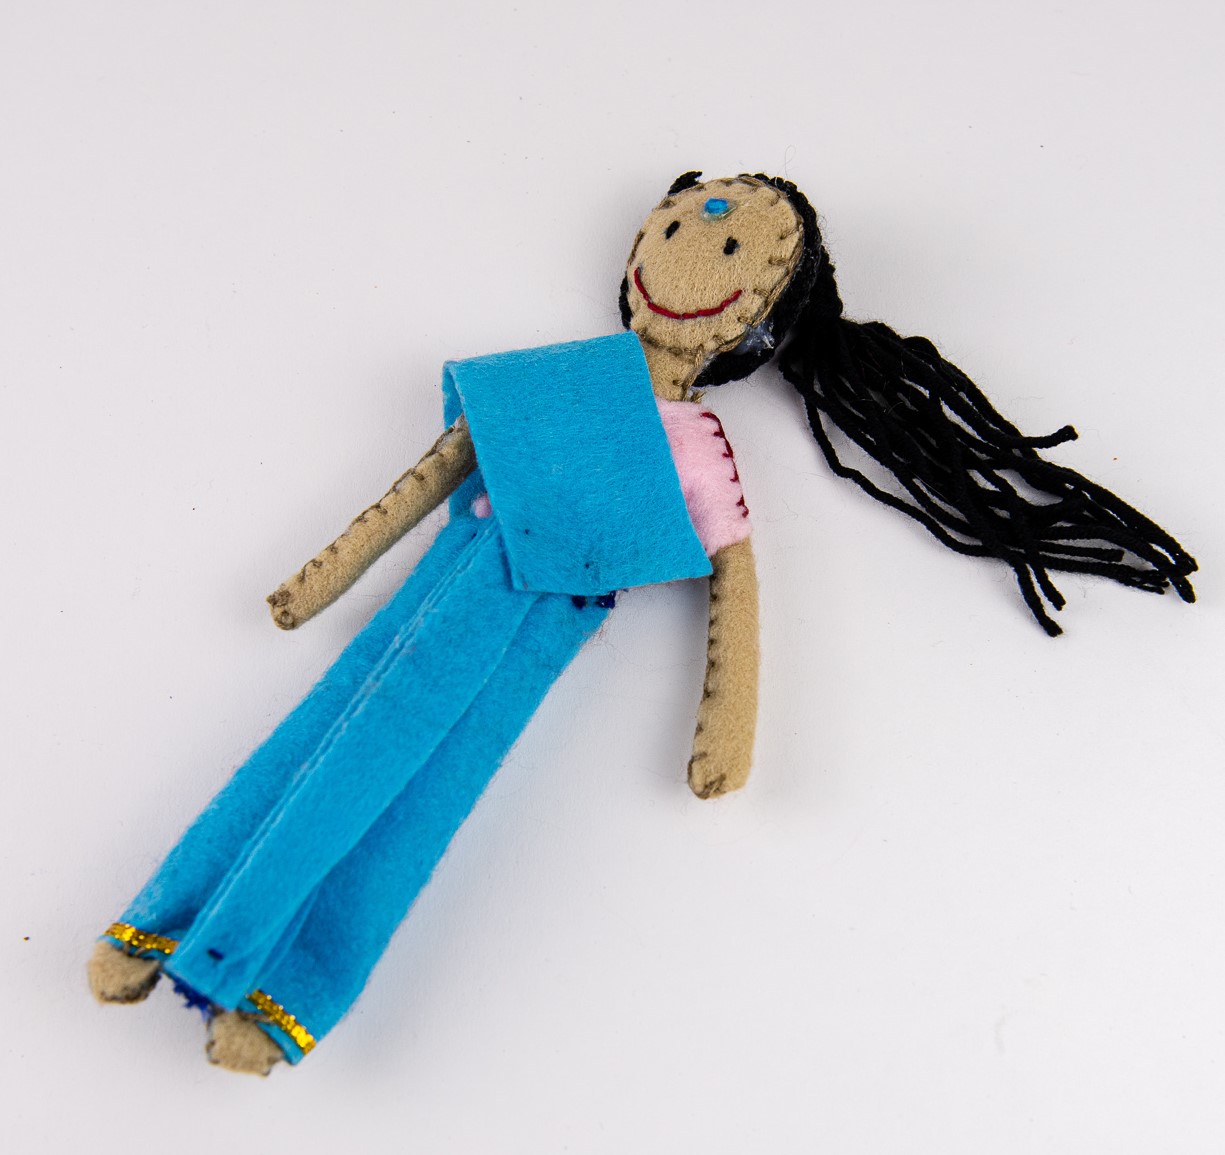 Handmade Fabric Dolls (Set of 3) | Eco friendly Soft Toy